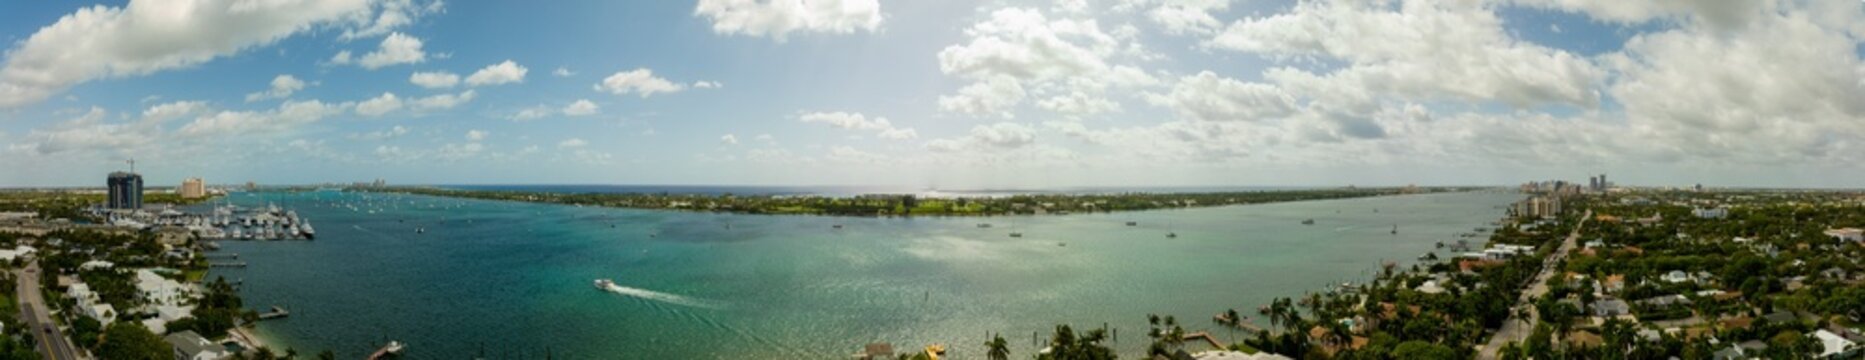 Aerial panorama Intracoastal Waterway West Palm Beach FL